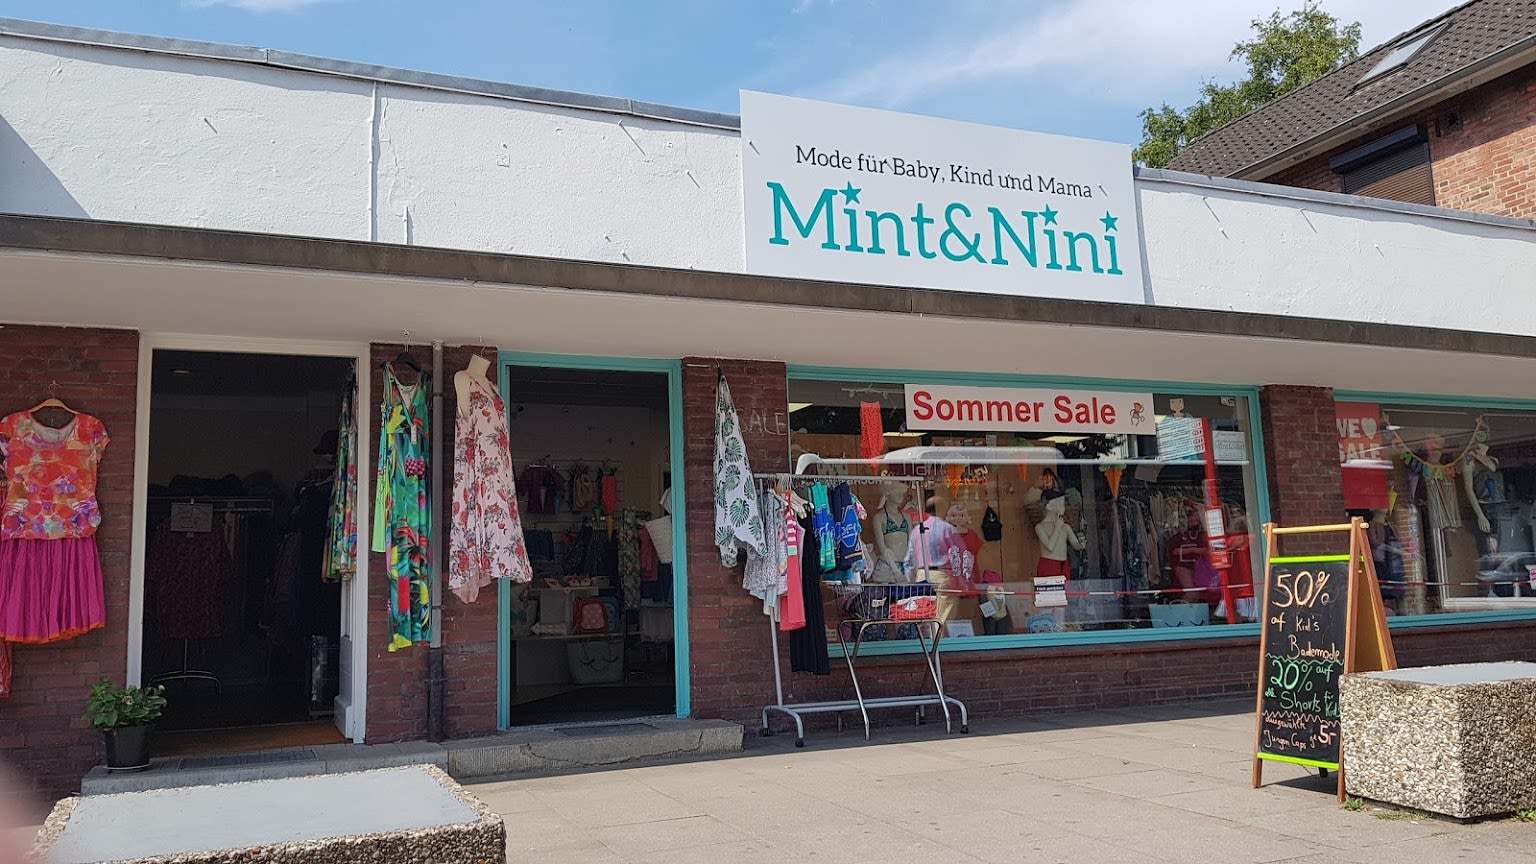 Mint&Nini